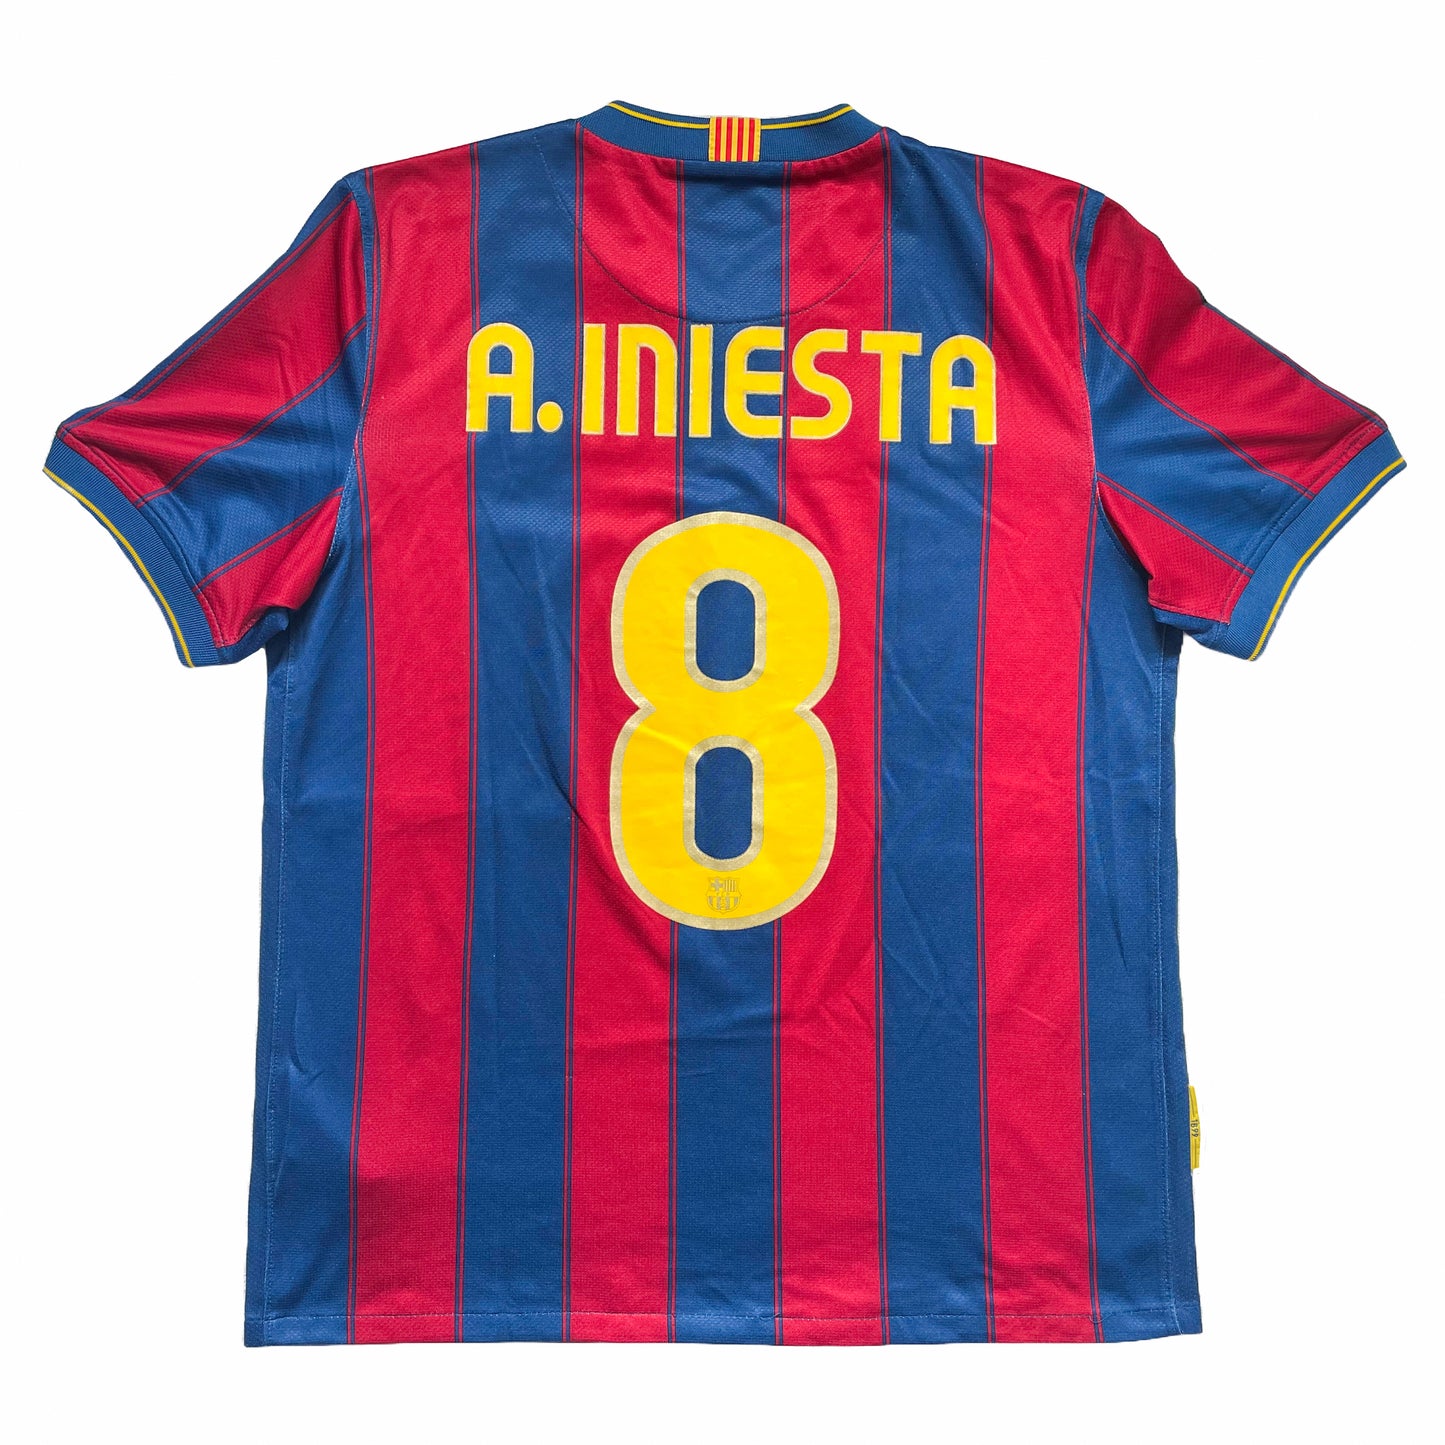 2009-2010 FC Barcelona home shirt #8 Iniesta (M)